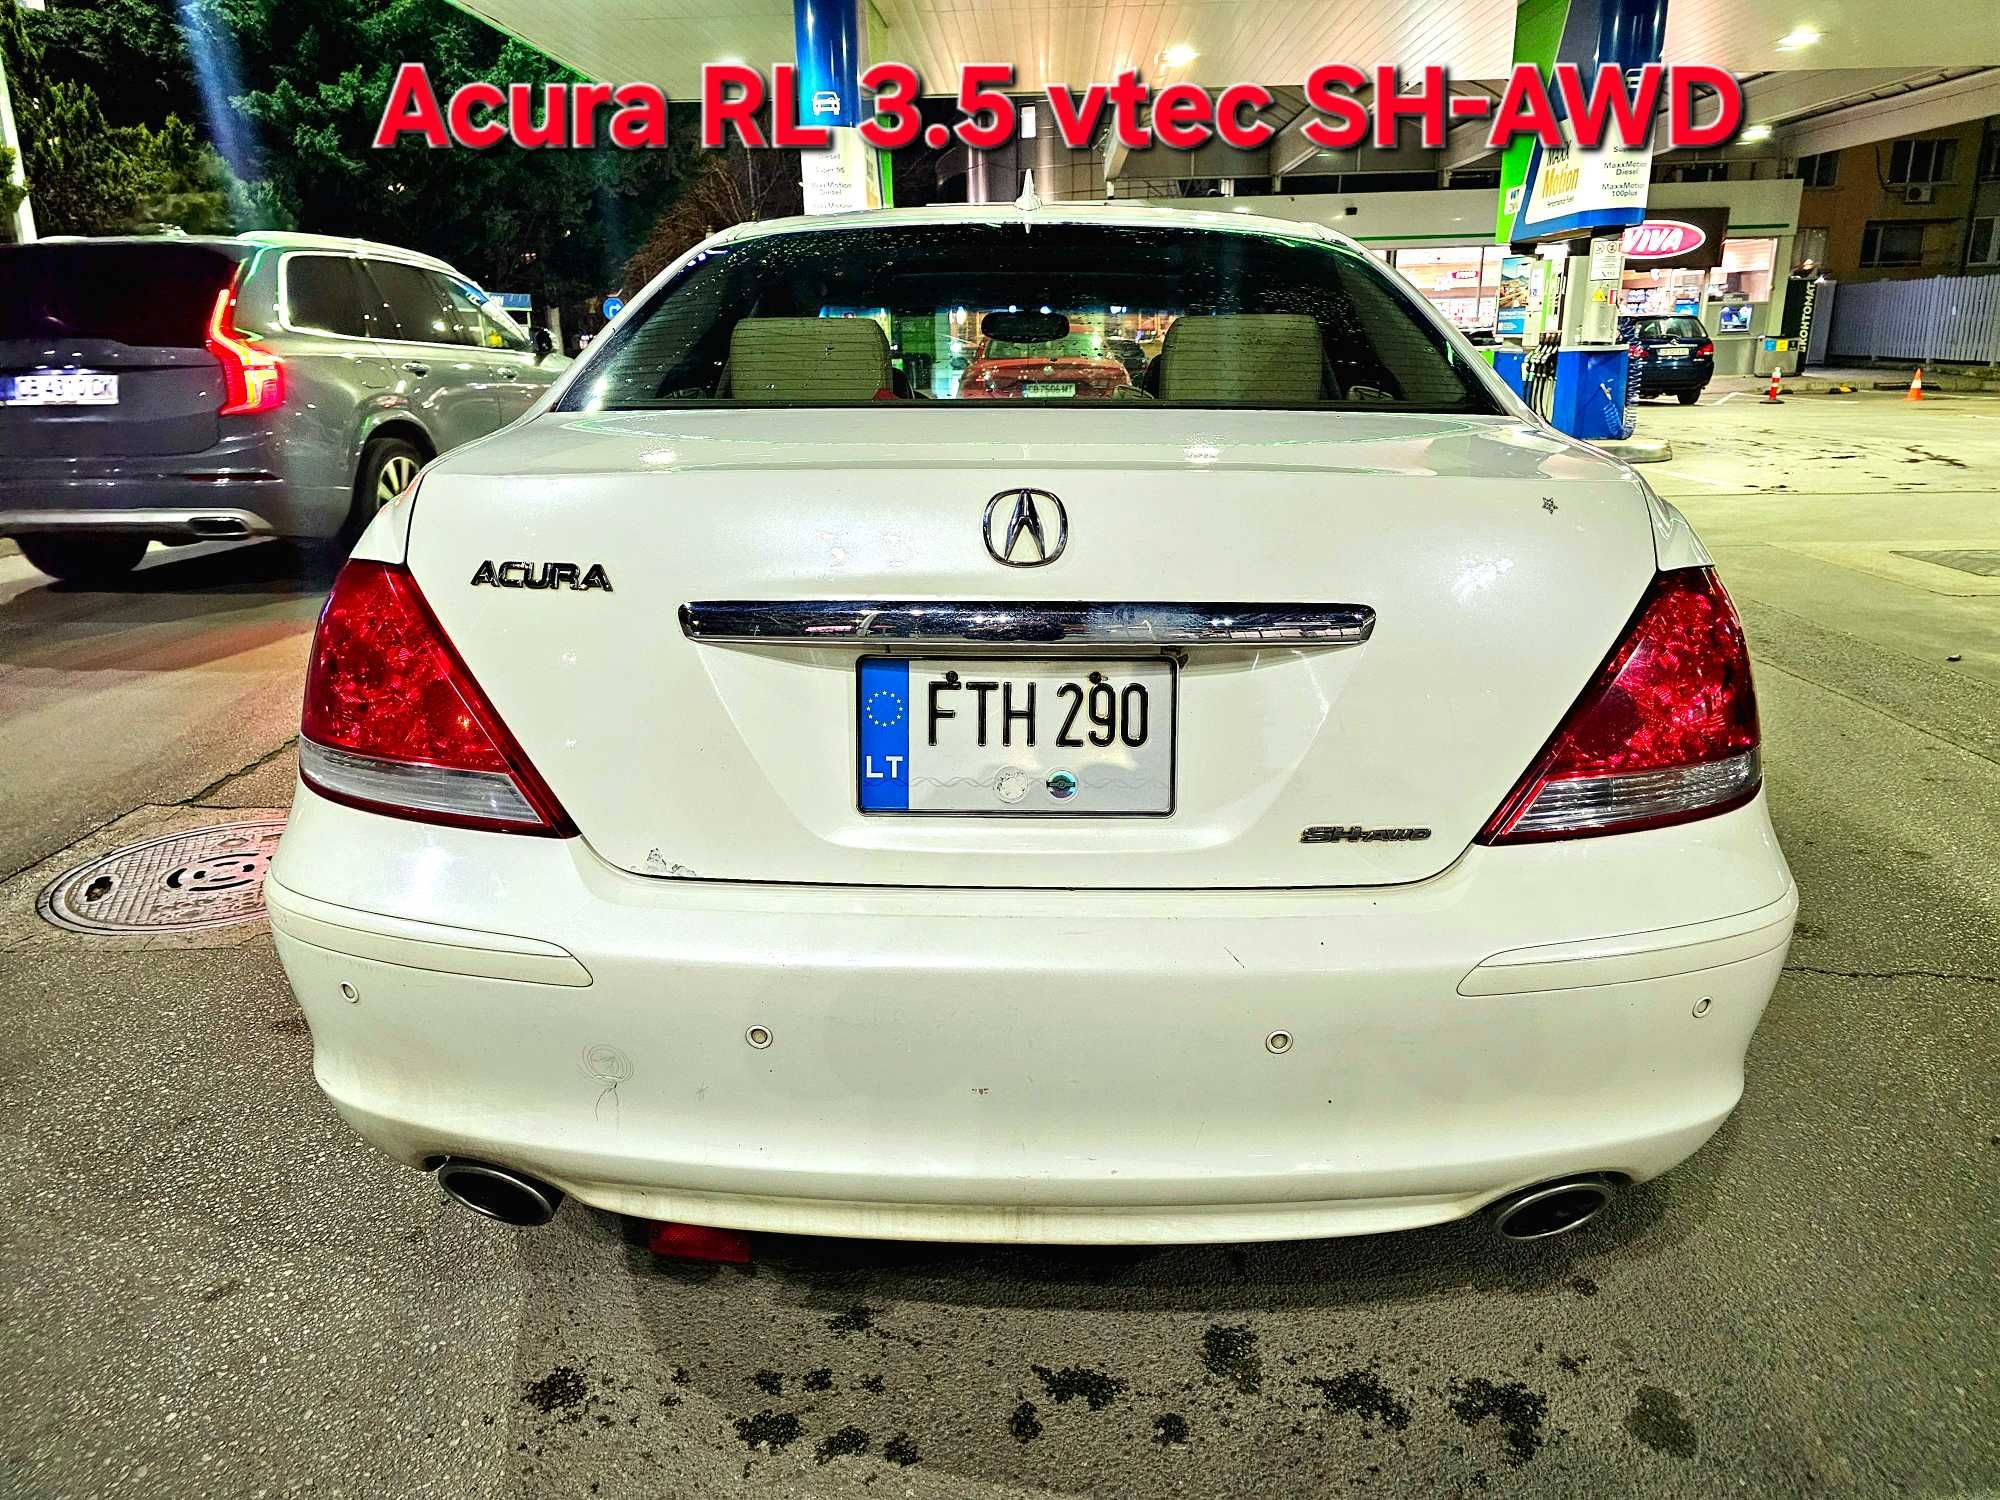 Acura RL/Honda Legend 2006, 3.5 Vtec SH'AWD LPG